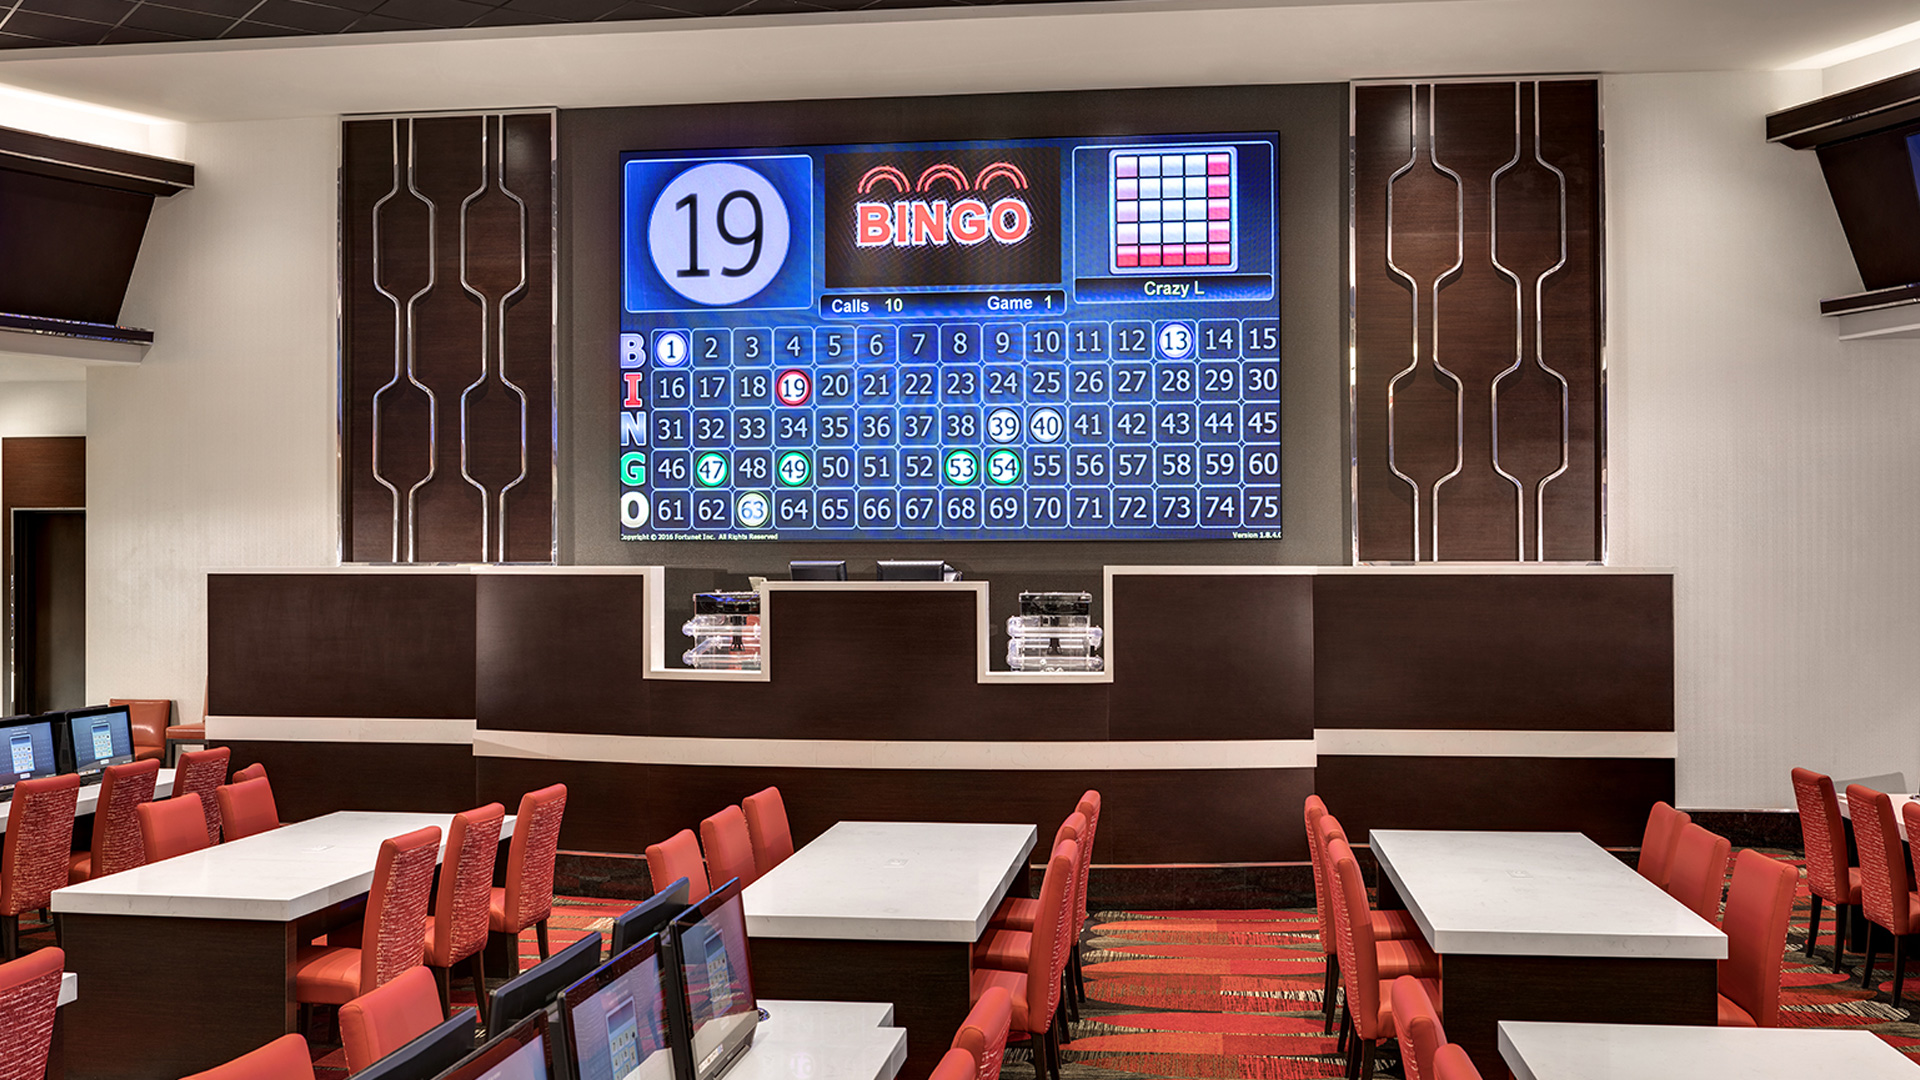 Station casinos big bingo weekend october 2020 calendar